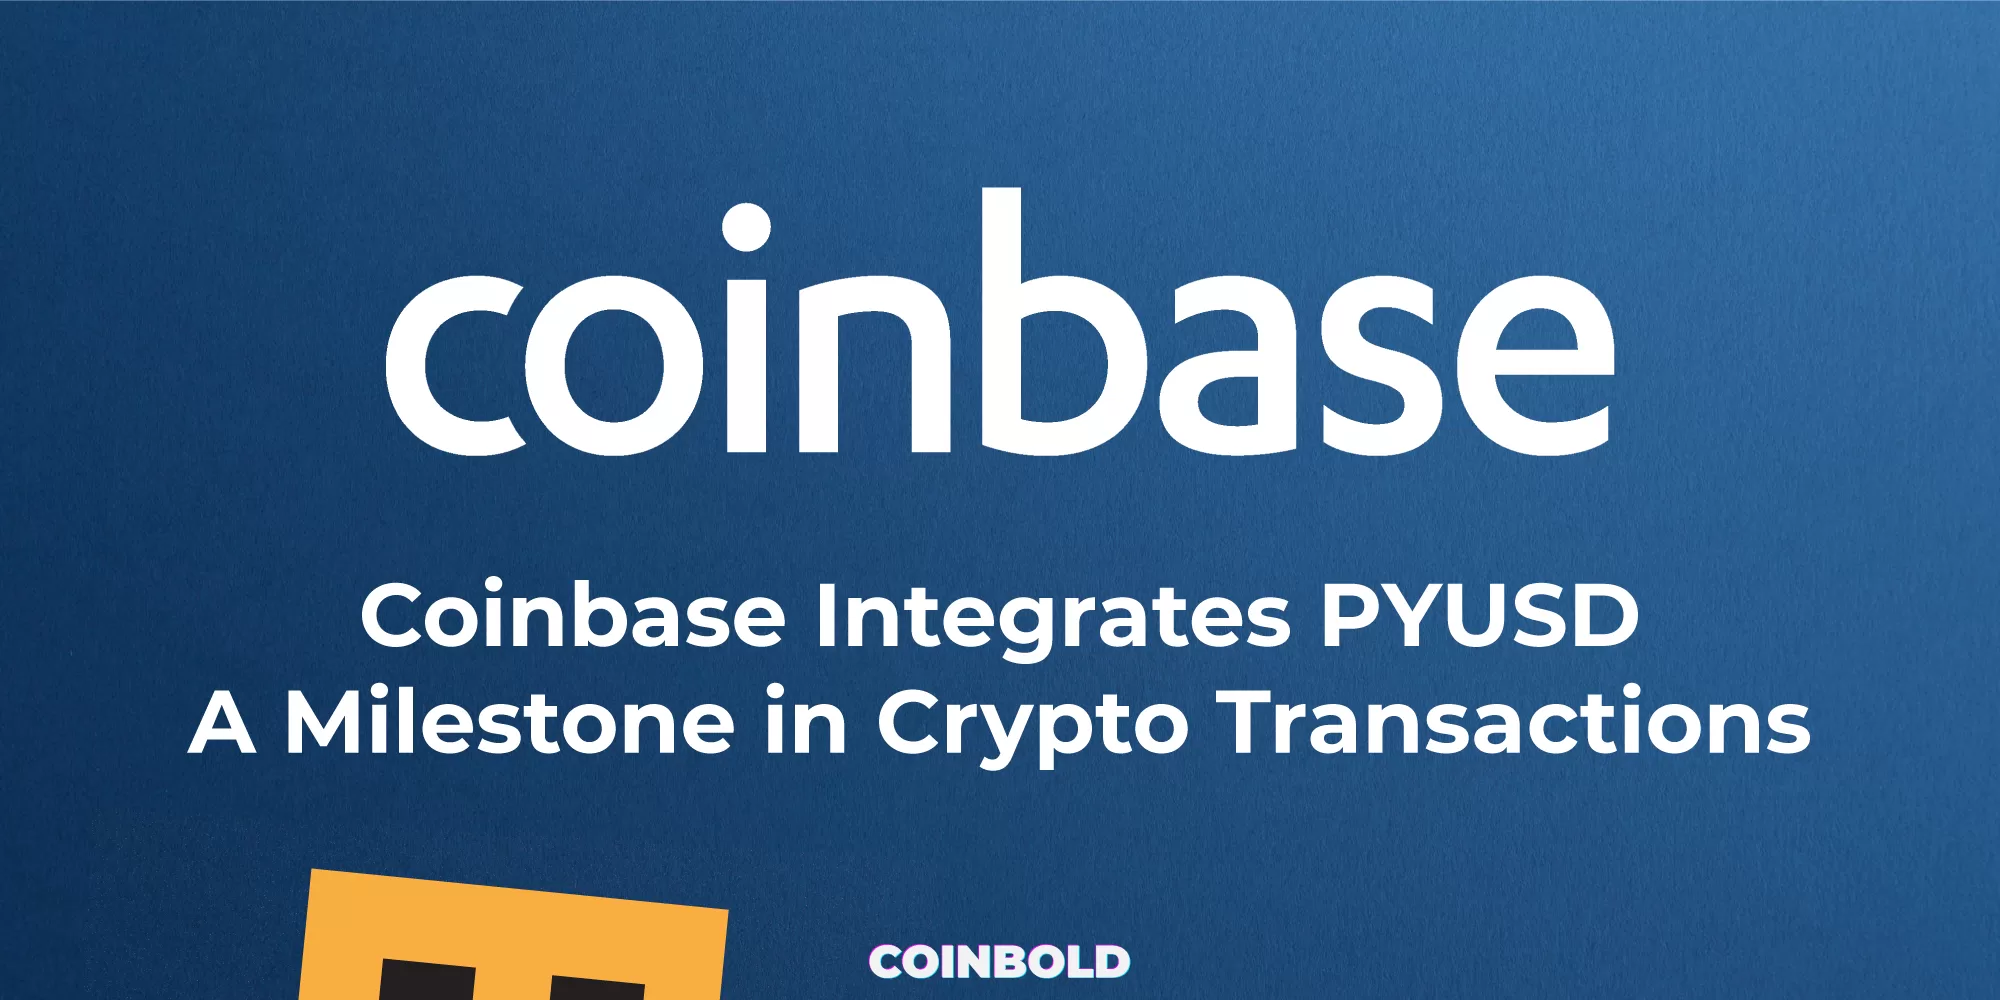 Coinbase Integrates PYUSD A Milestone in Crypto Transactions